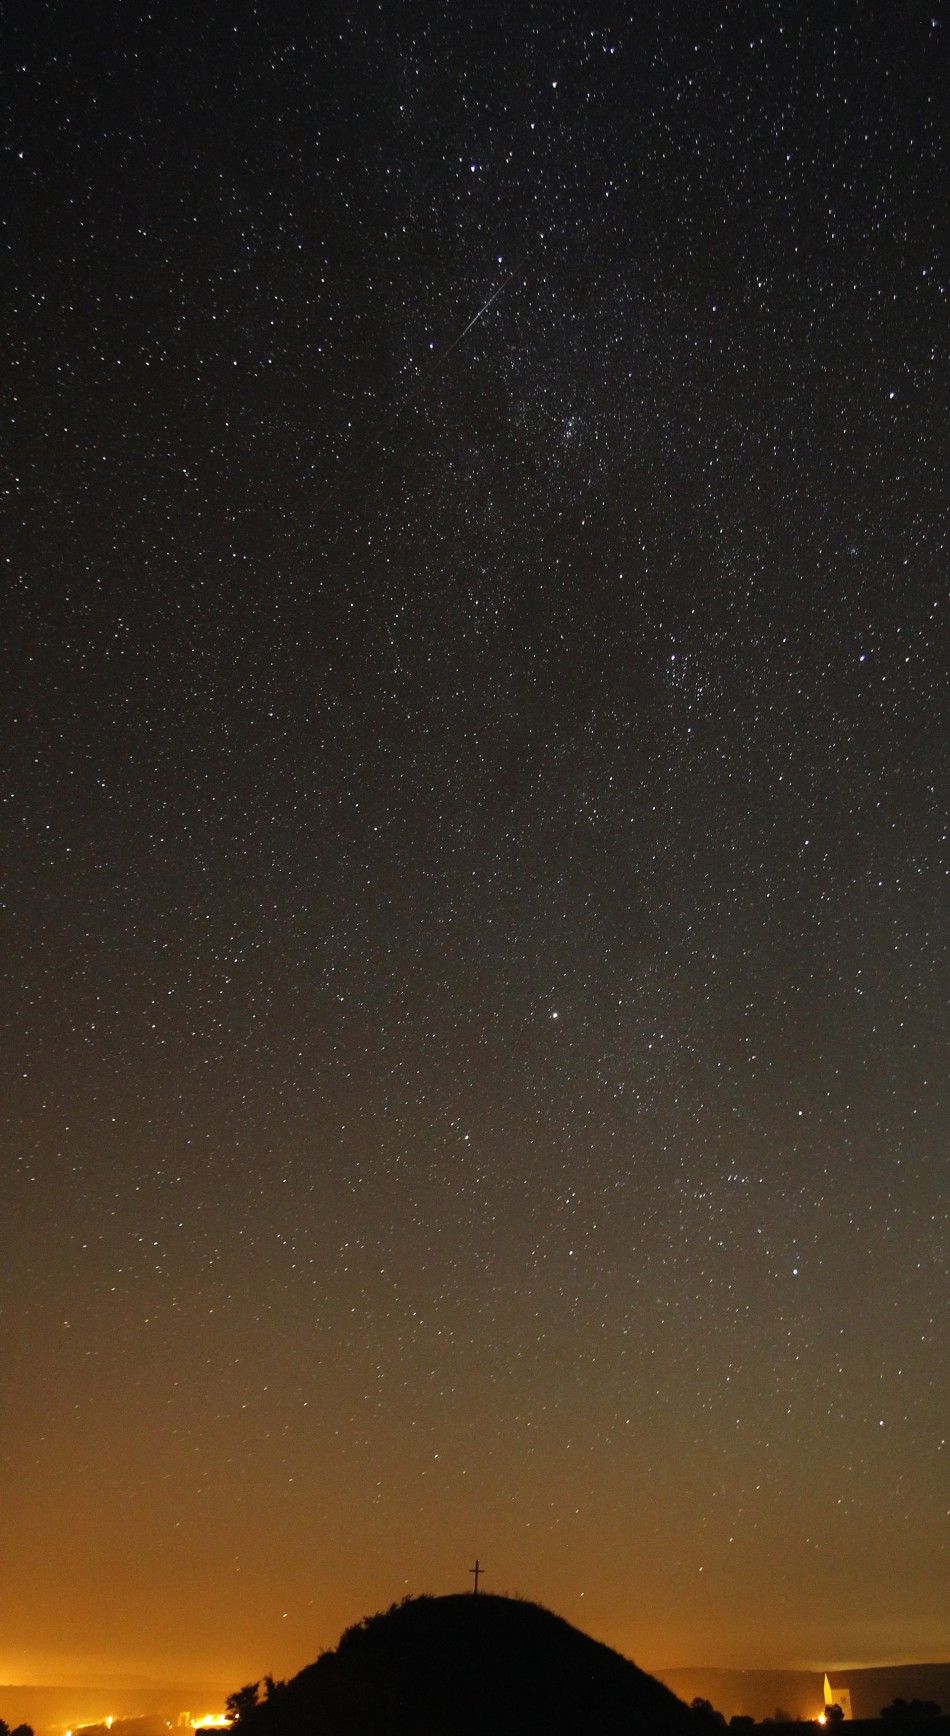 A meteor streaks past stars in the night sky over Leeberg hill in Grossmugl